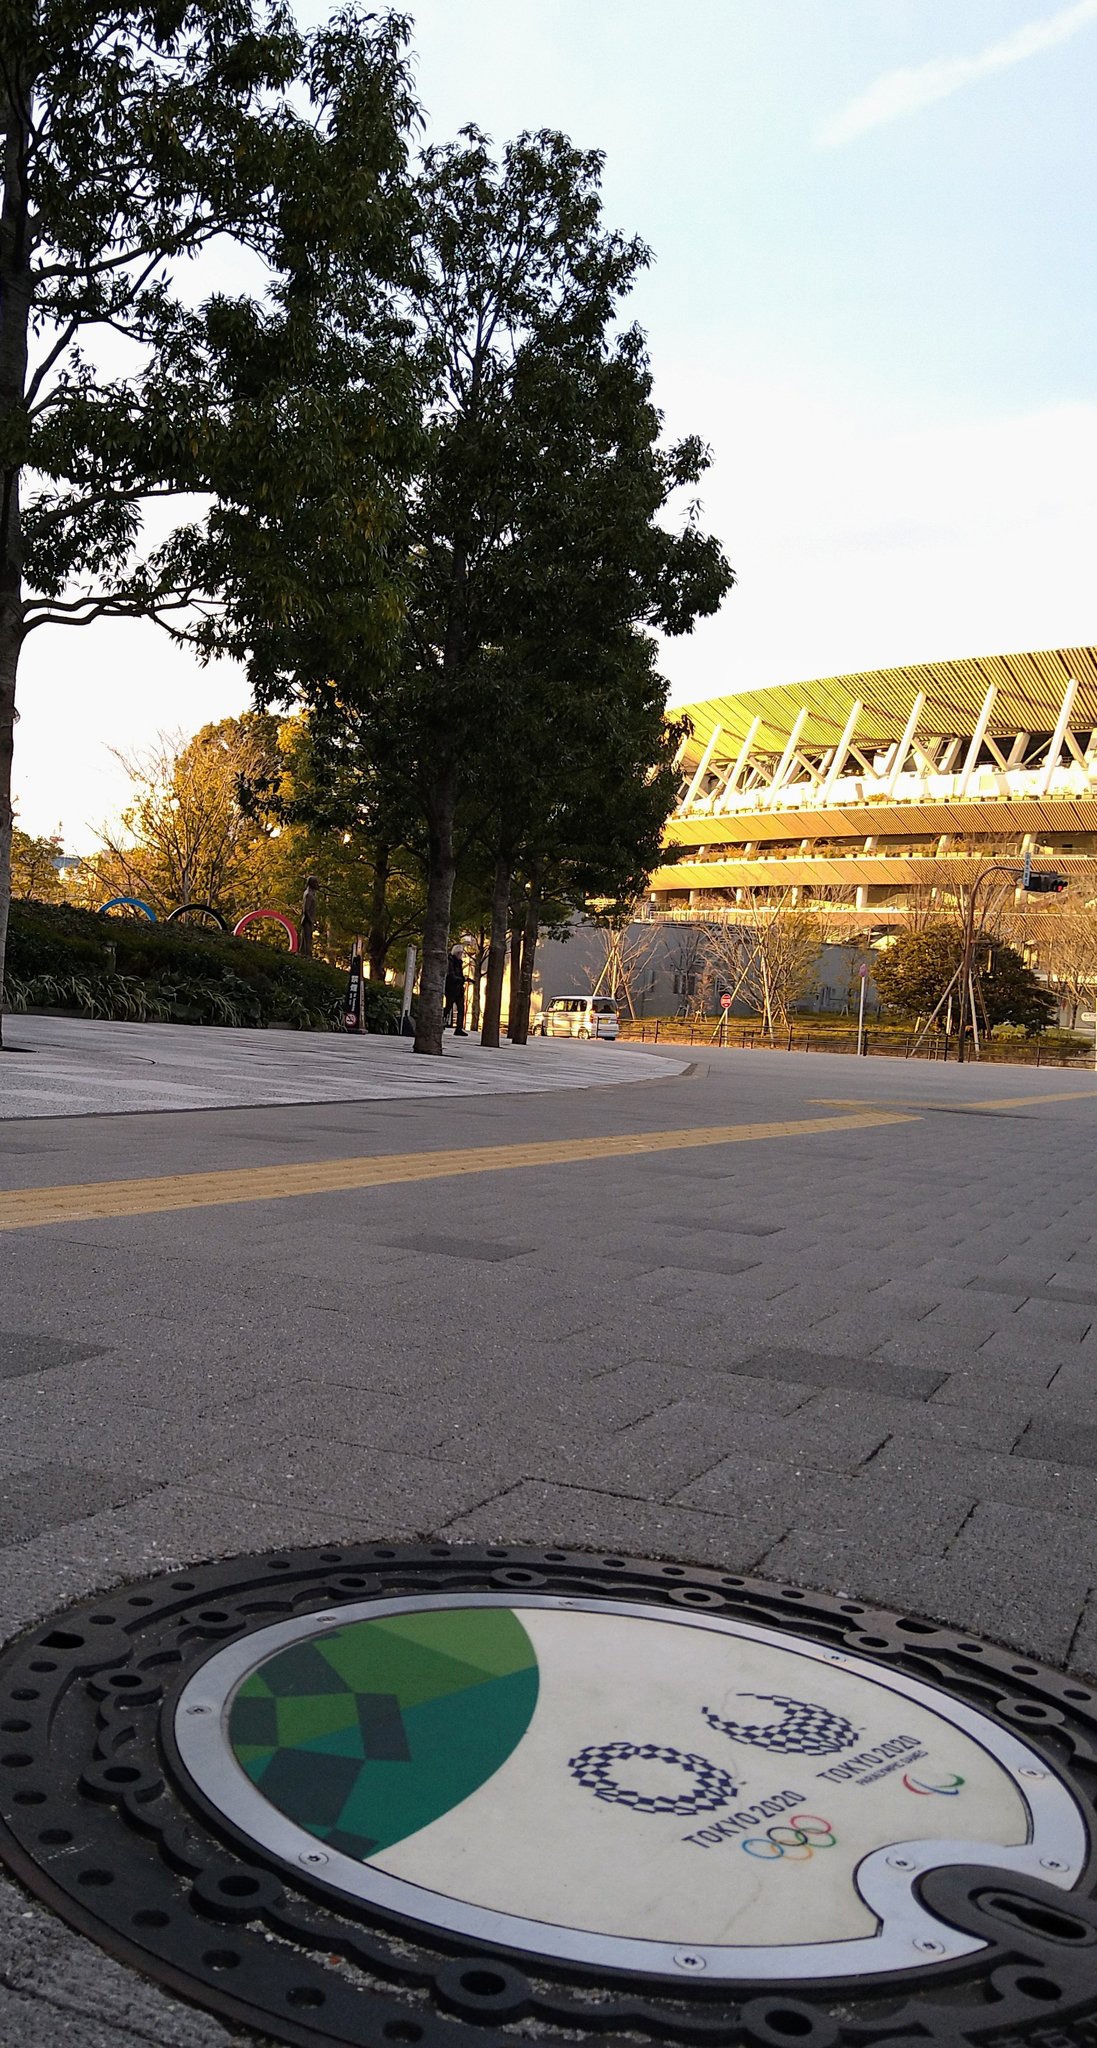 Excellence Award Japan National Stadium and Manhole 内田倫義